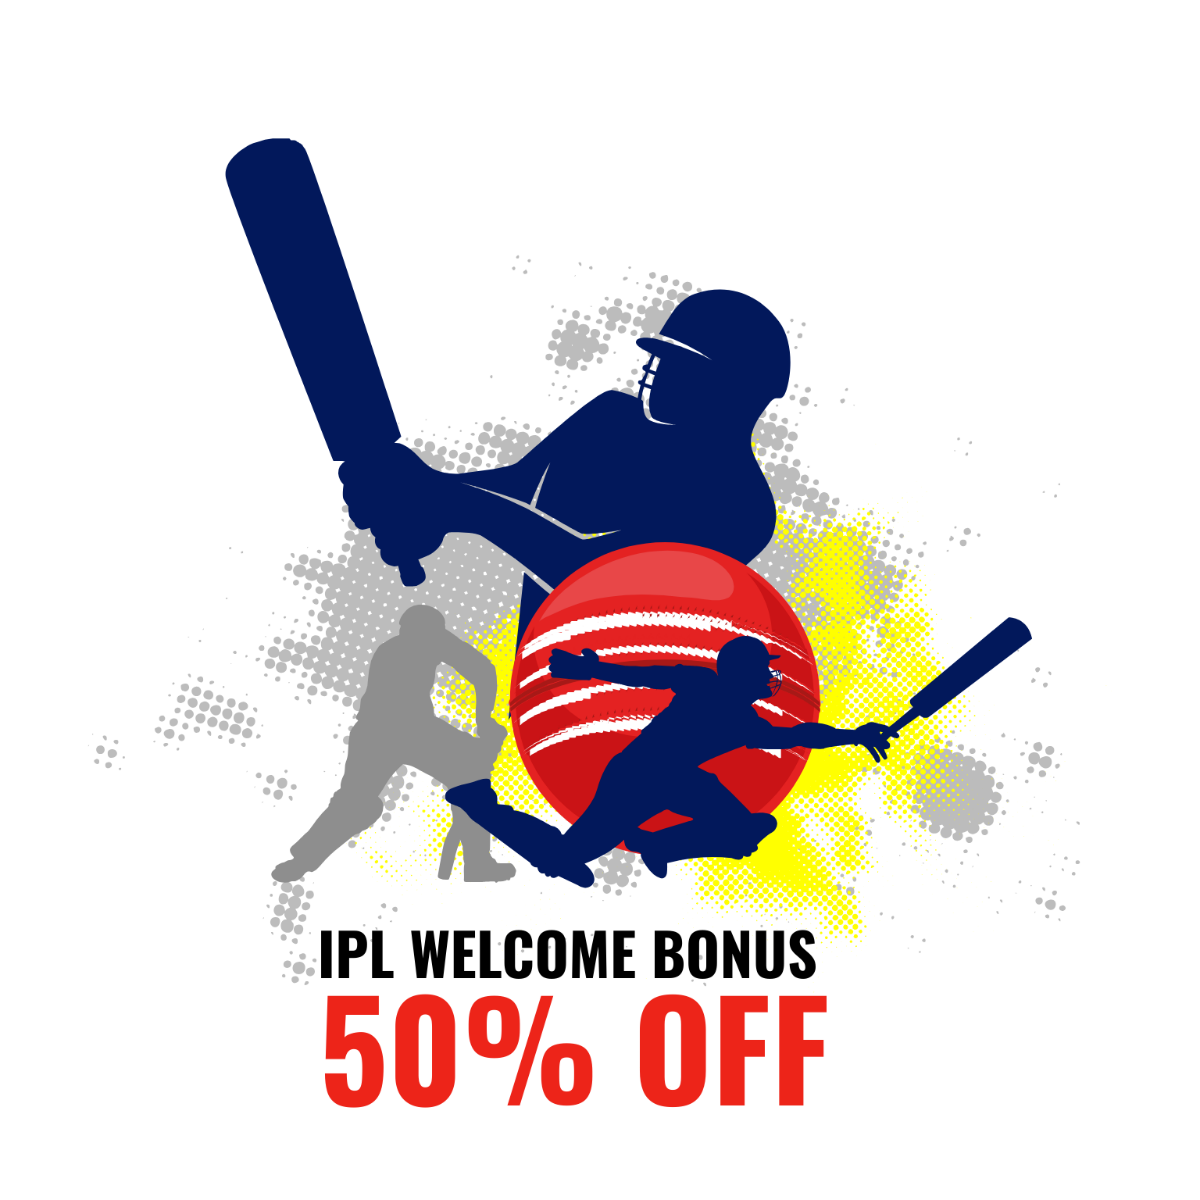 Free IPL Welcome Bonus Offer Design Template